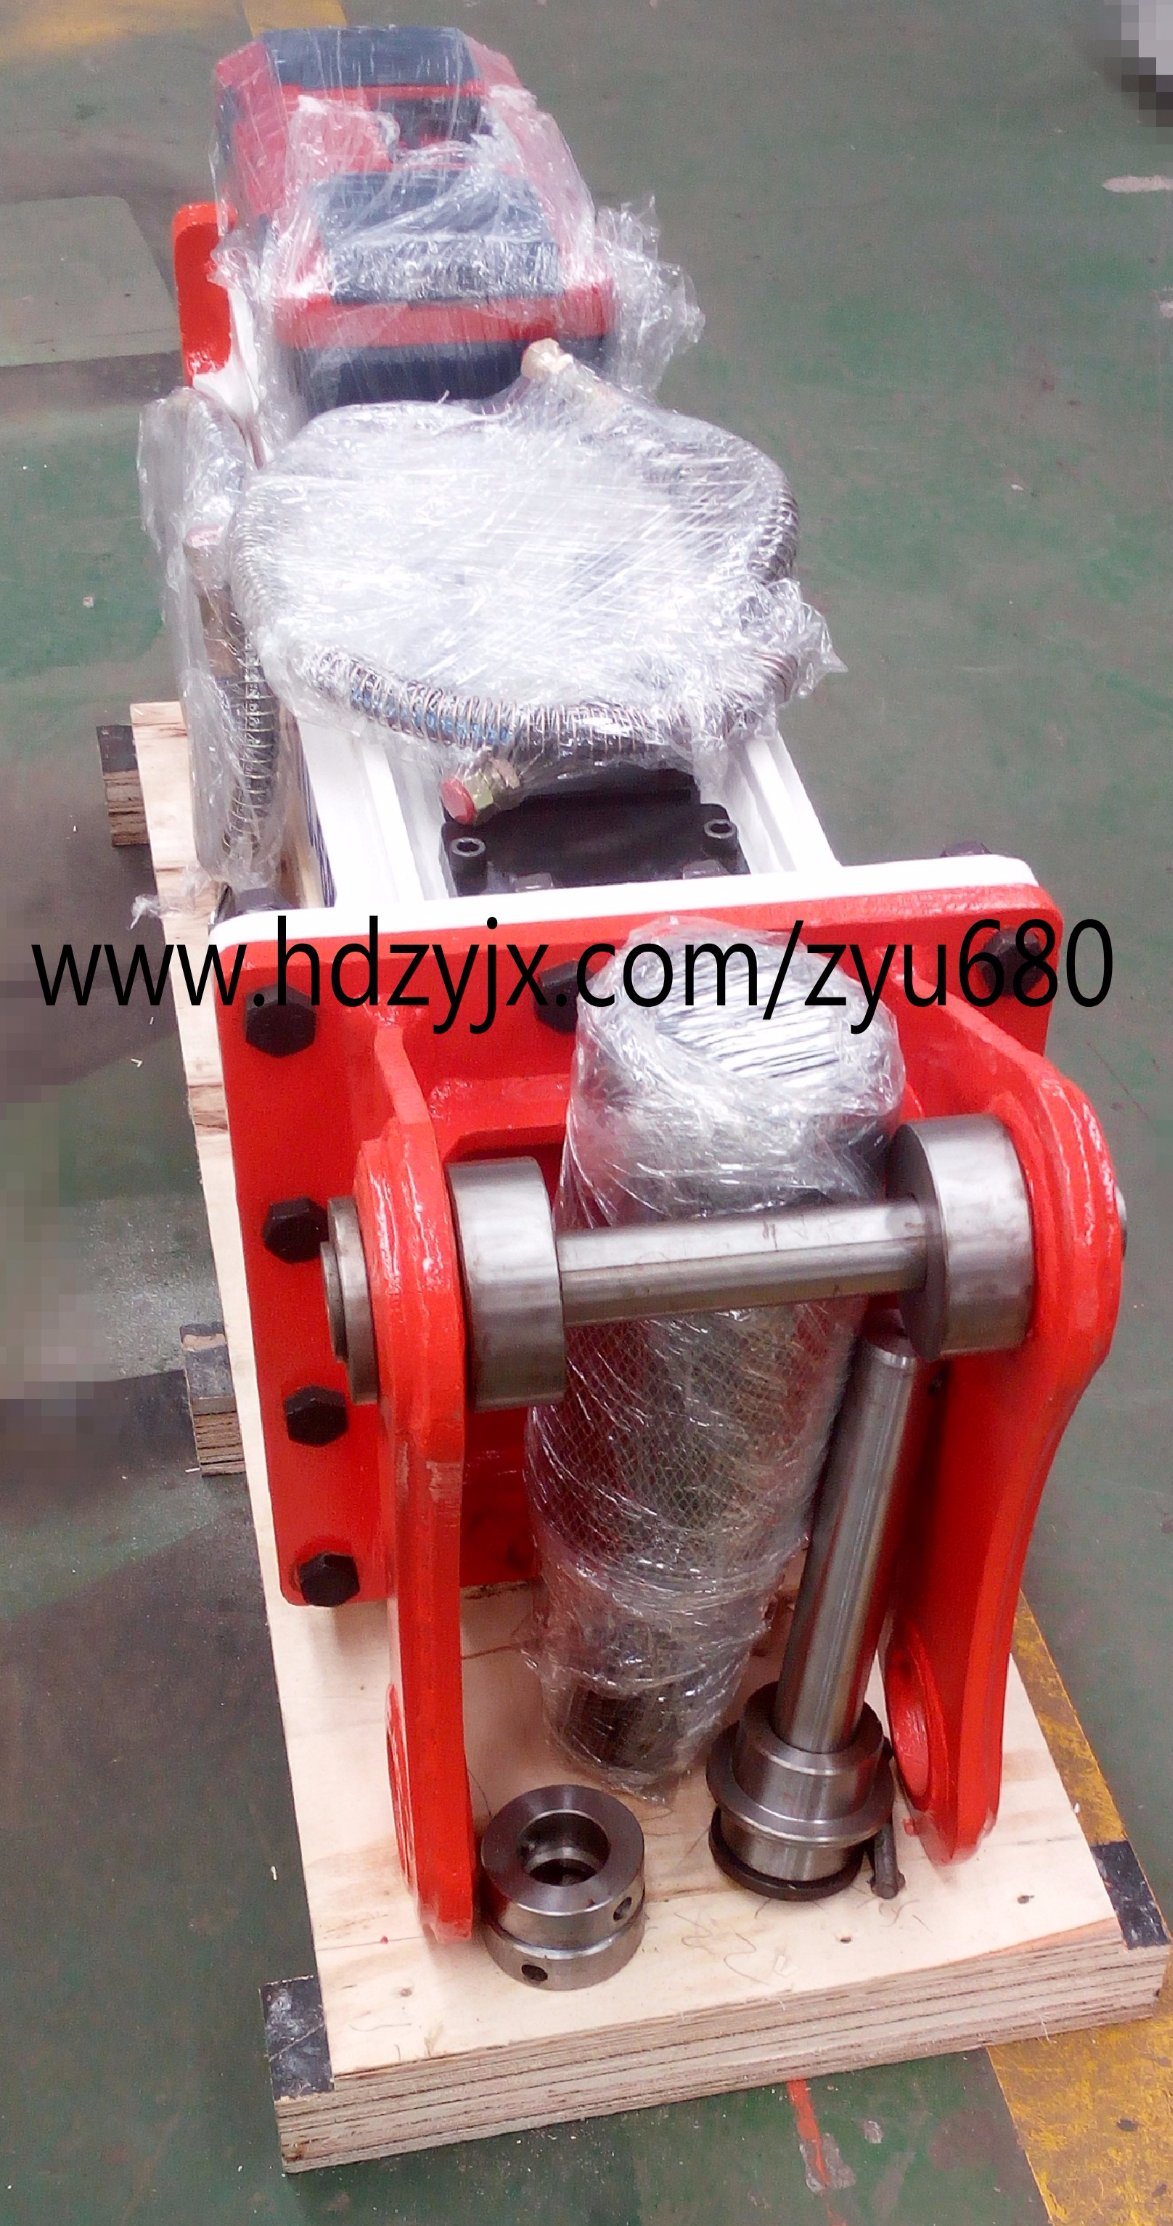 Hydraulic Breaker Hammer for 4-7 Ton Excavator Zyu680